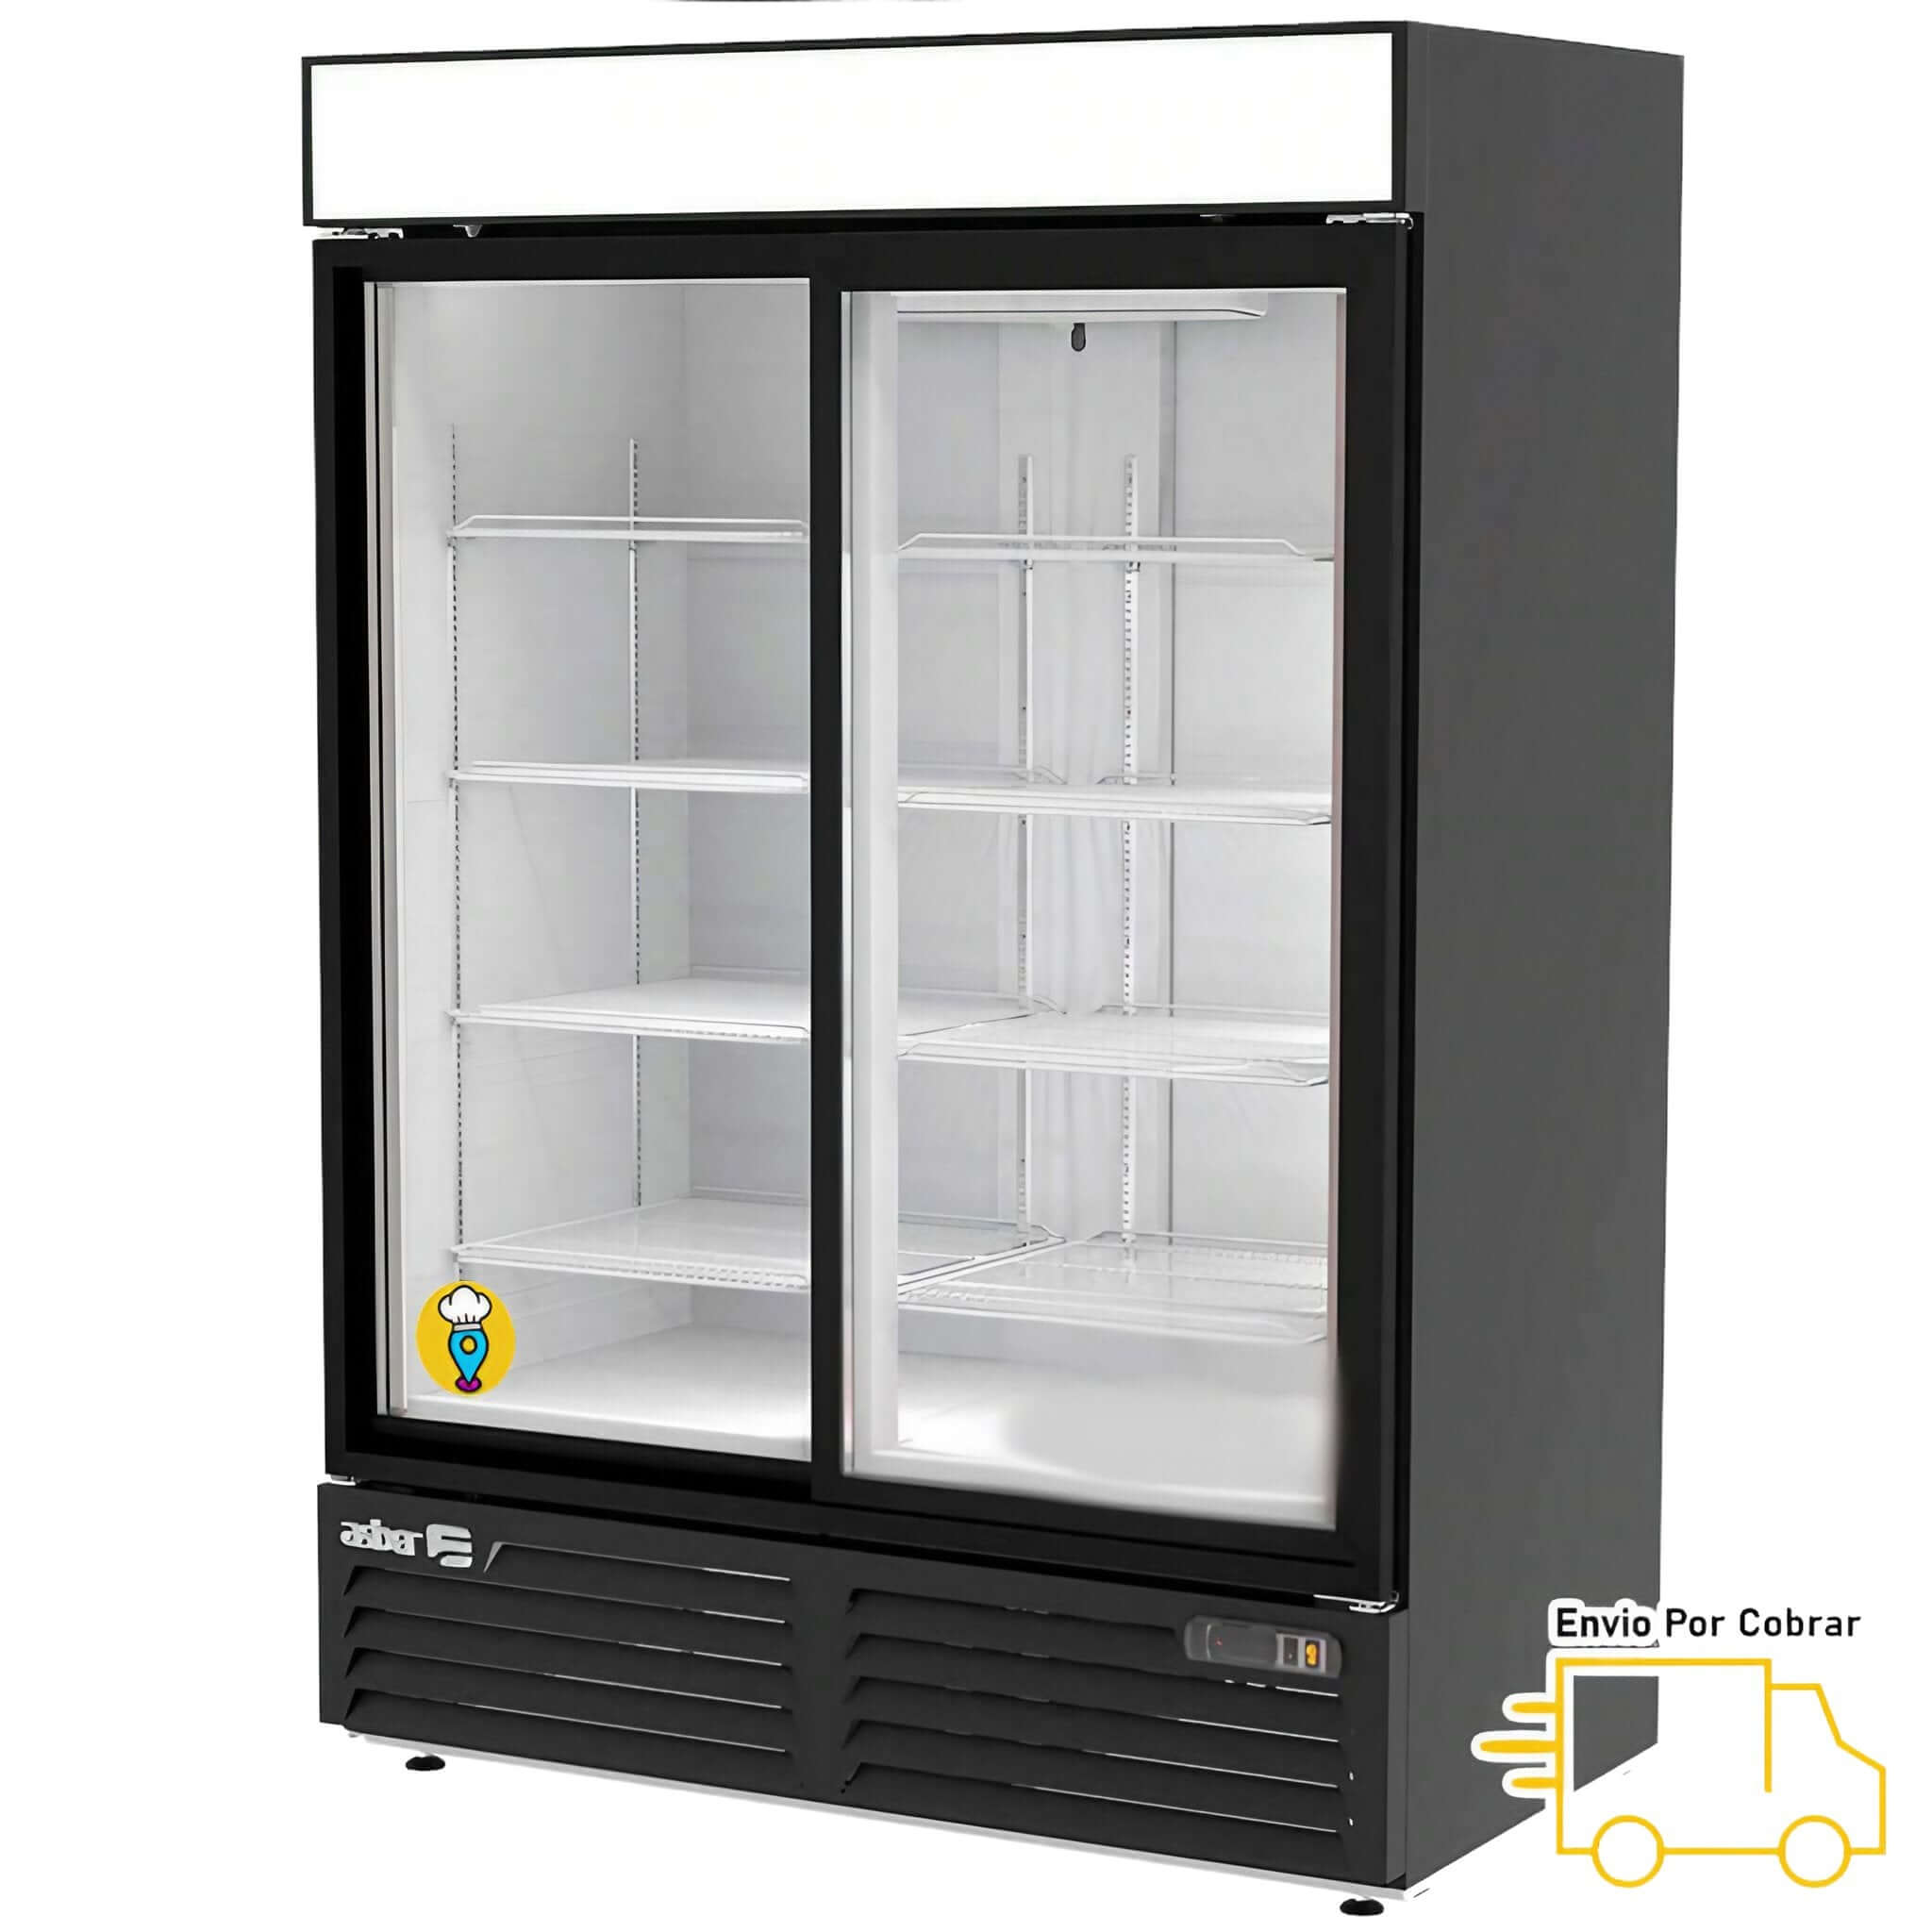 Refrigerador Puertas de Cristal 47 pies ASBER - ARMD-47SD-HC-Refrigeradores Puerta de Cristal-ASBER-ElLugarDelChef.com